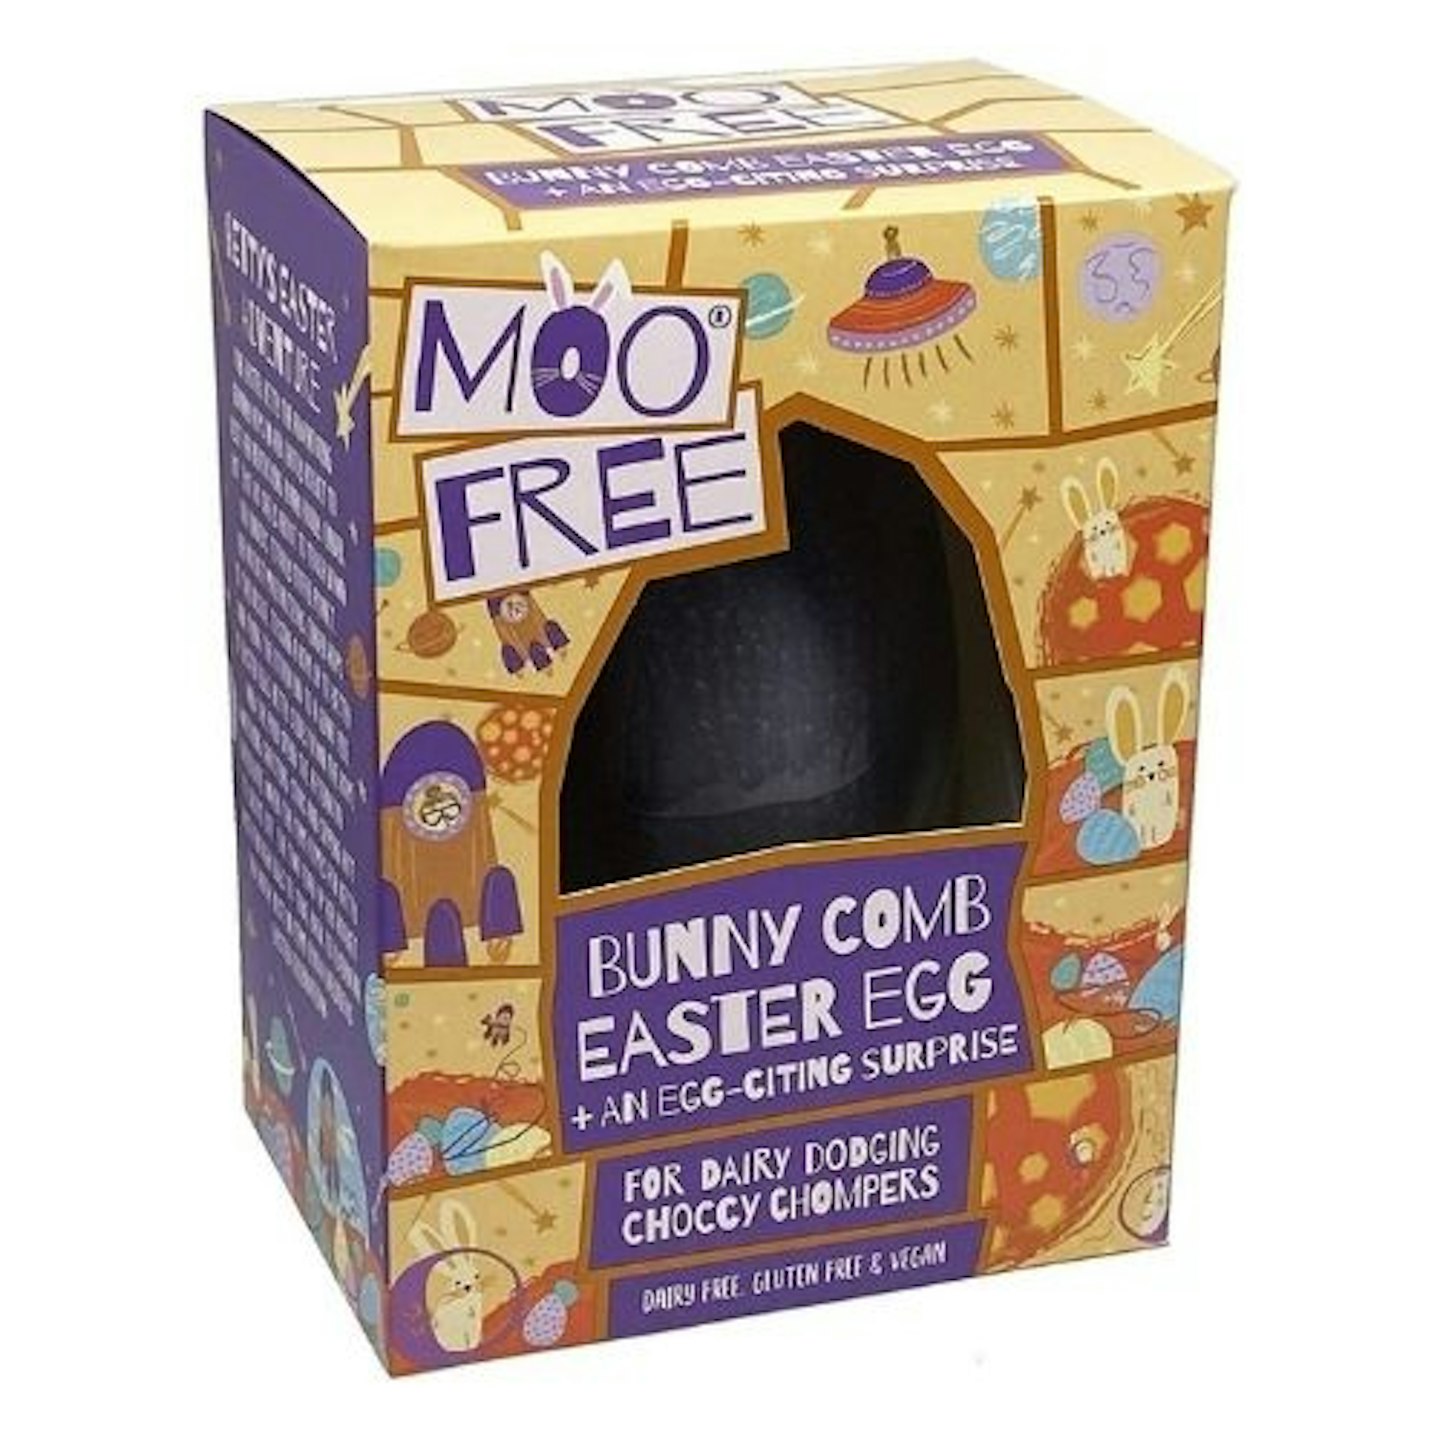 Moo Free Easter Bunnycomb Egg